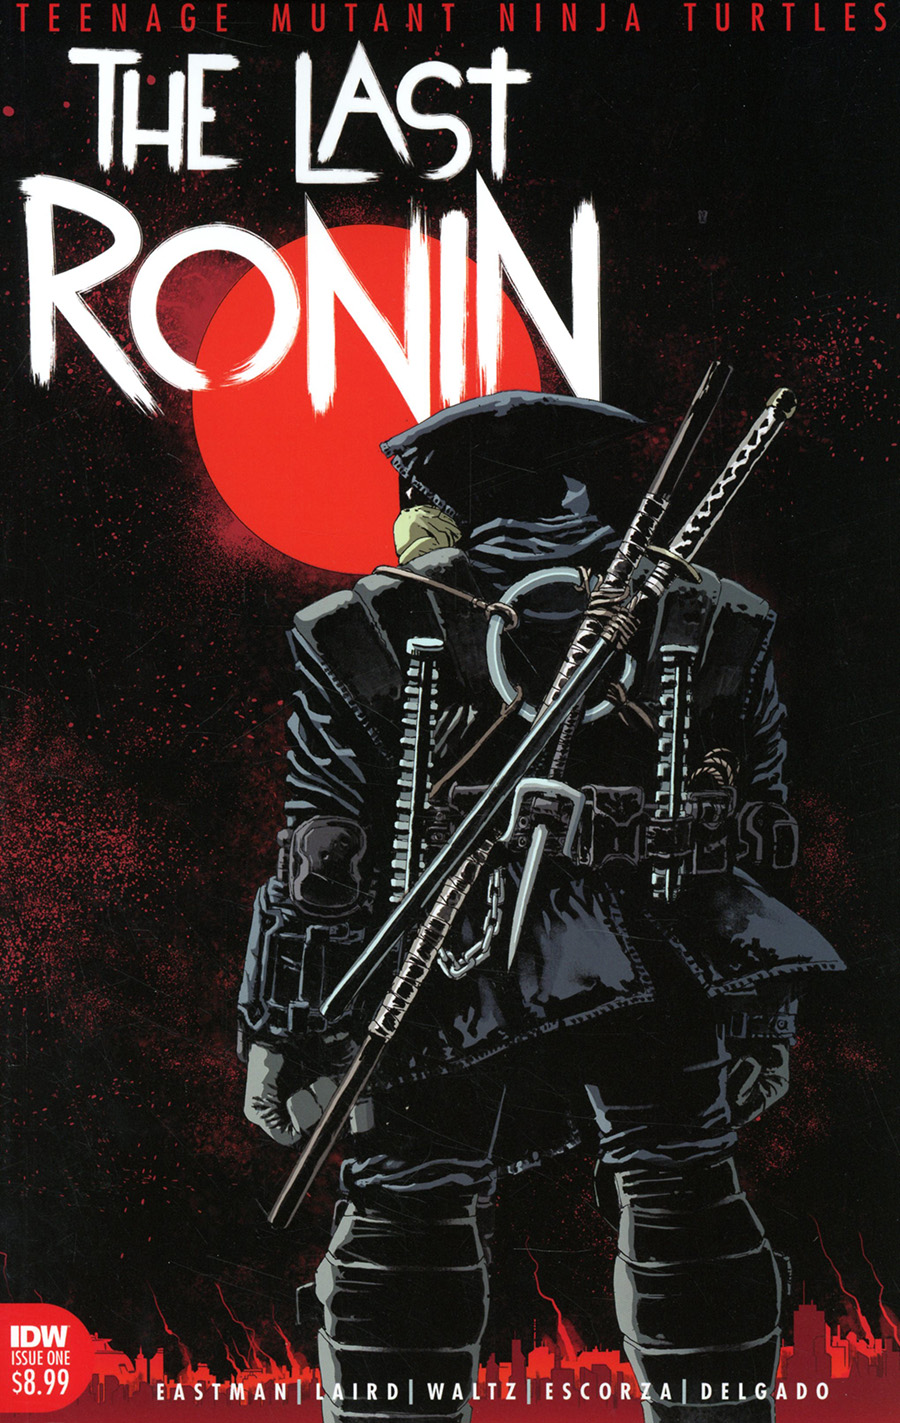 Teenage Mutant Ninja Turtles The Last Ronin #1 Cover A 1st Ptg Regular Andy Kuhn & Kevin Eastman Cover